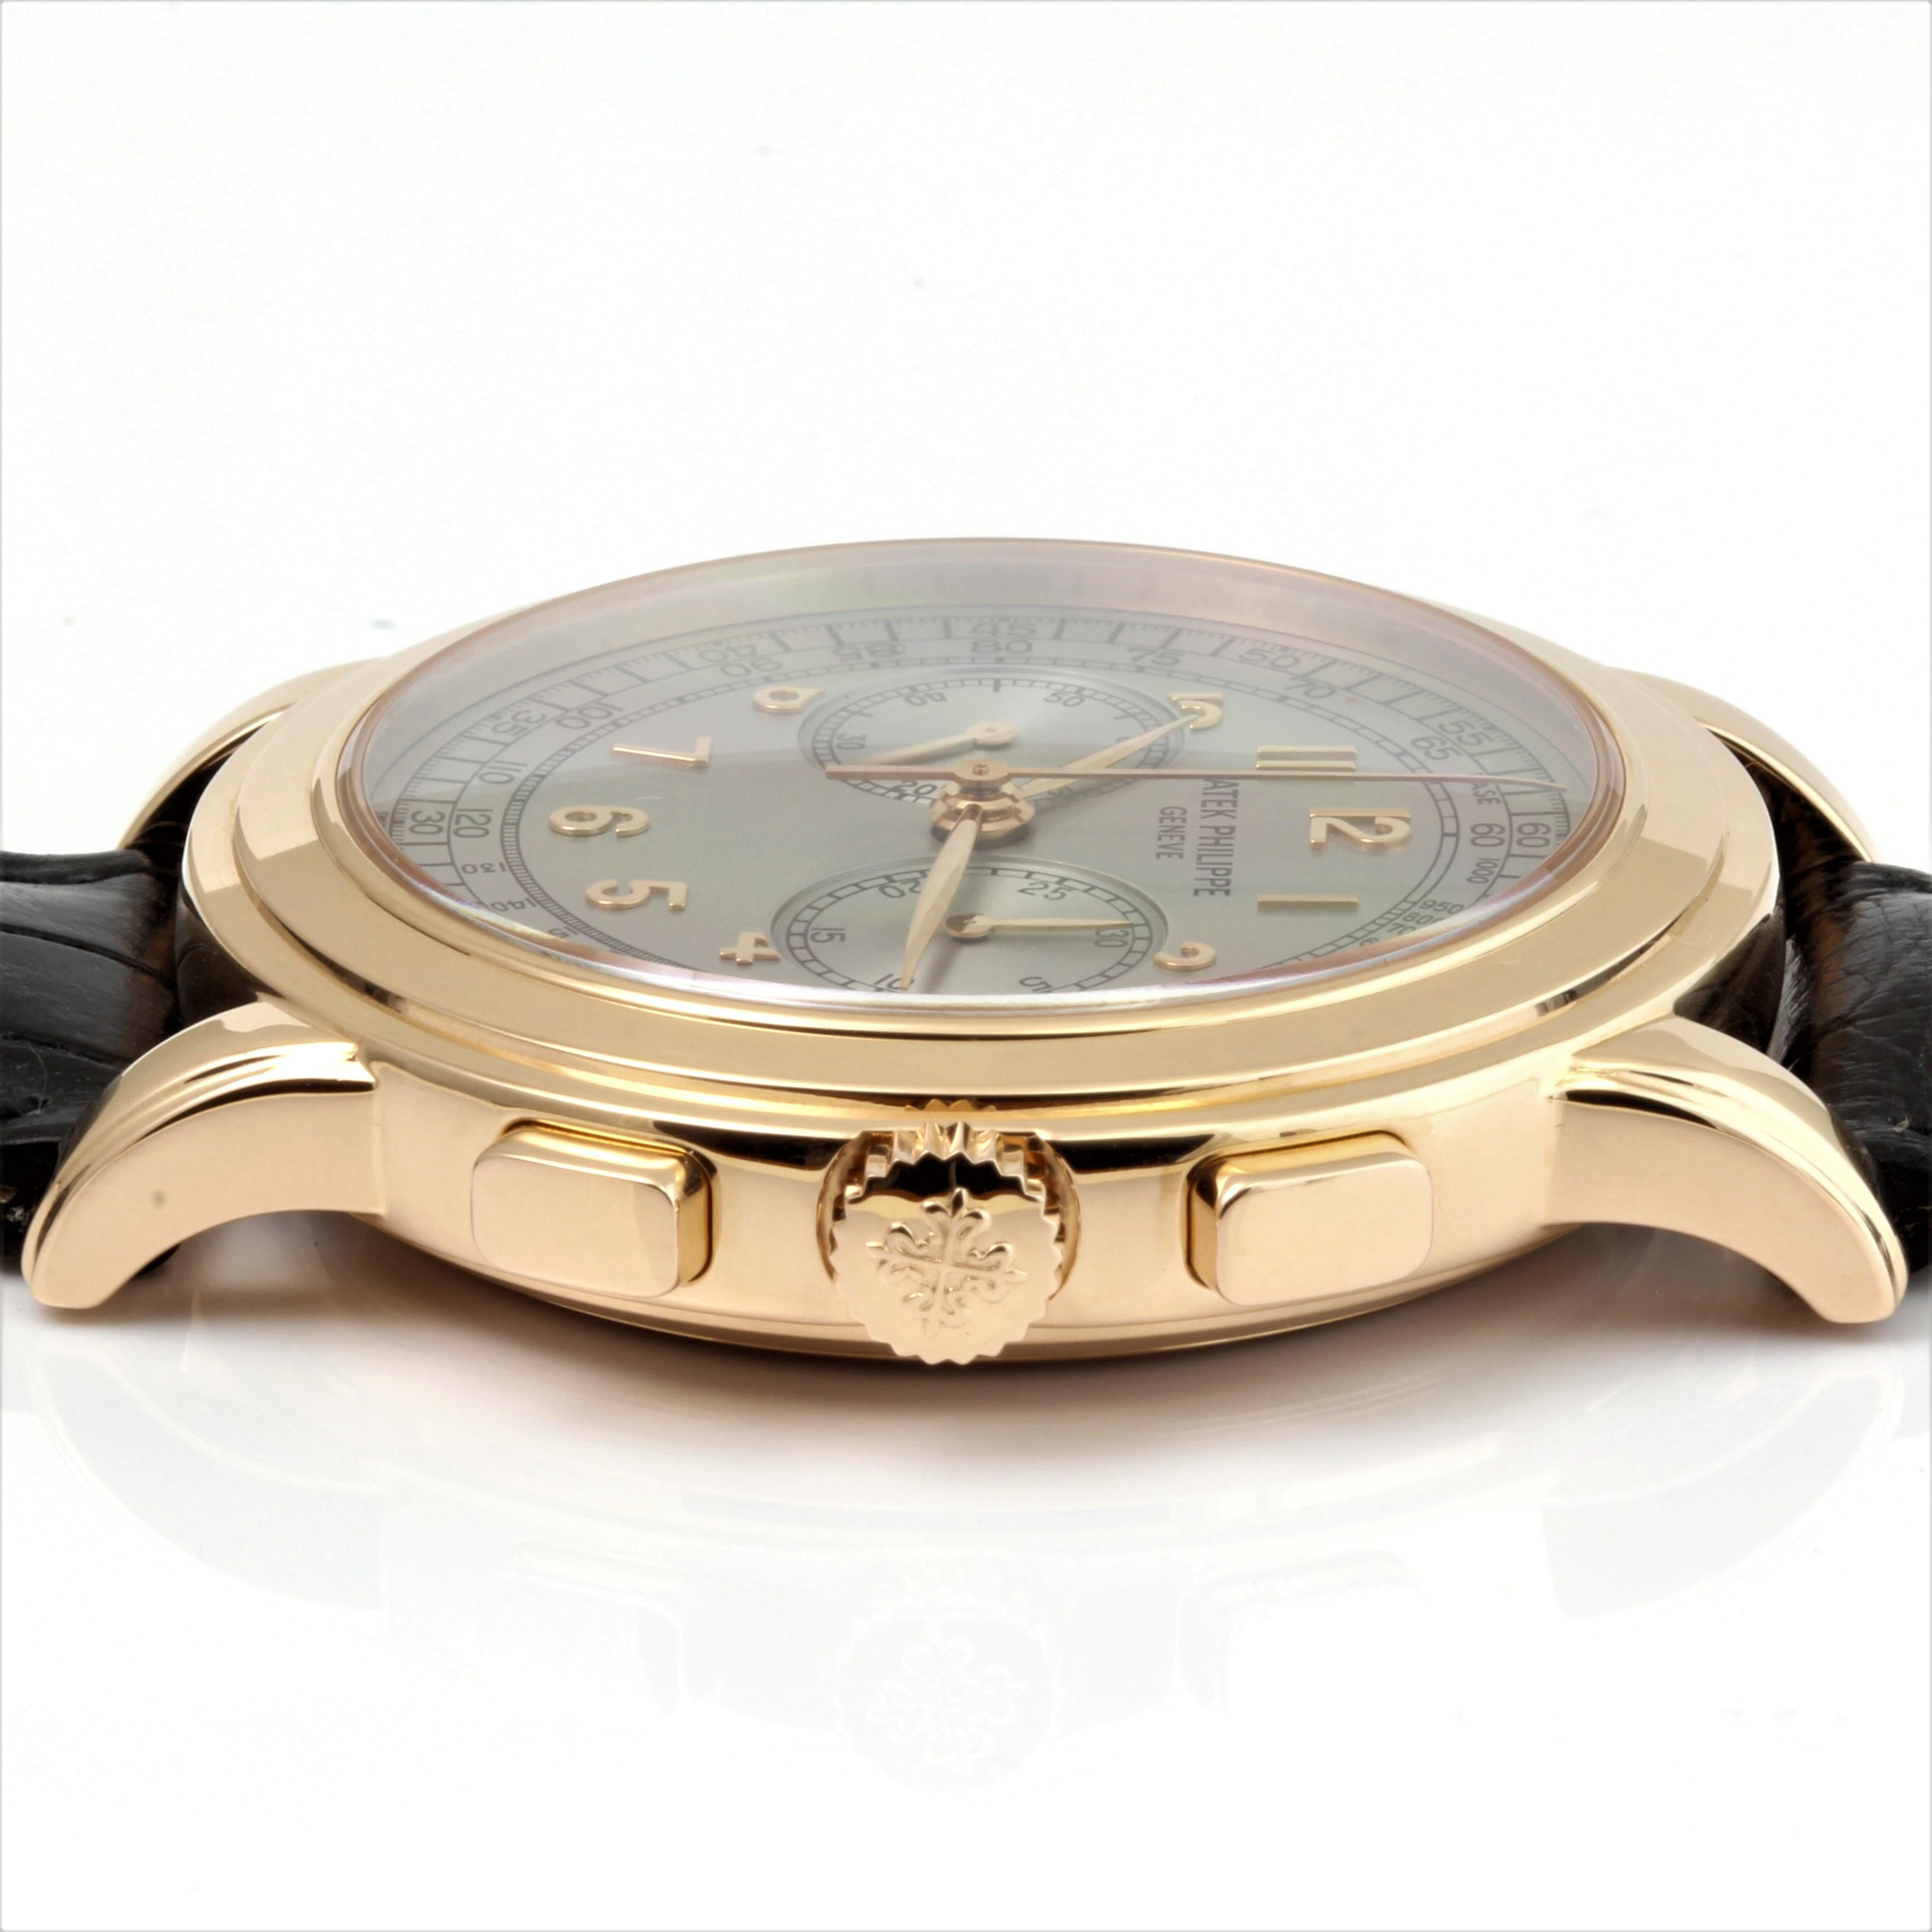 Patek Philippe 5070R- Rose Gold Chronograph Watch, Case, circa 2004 2